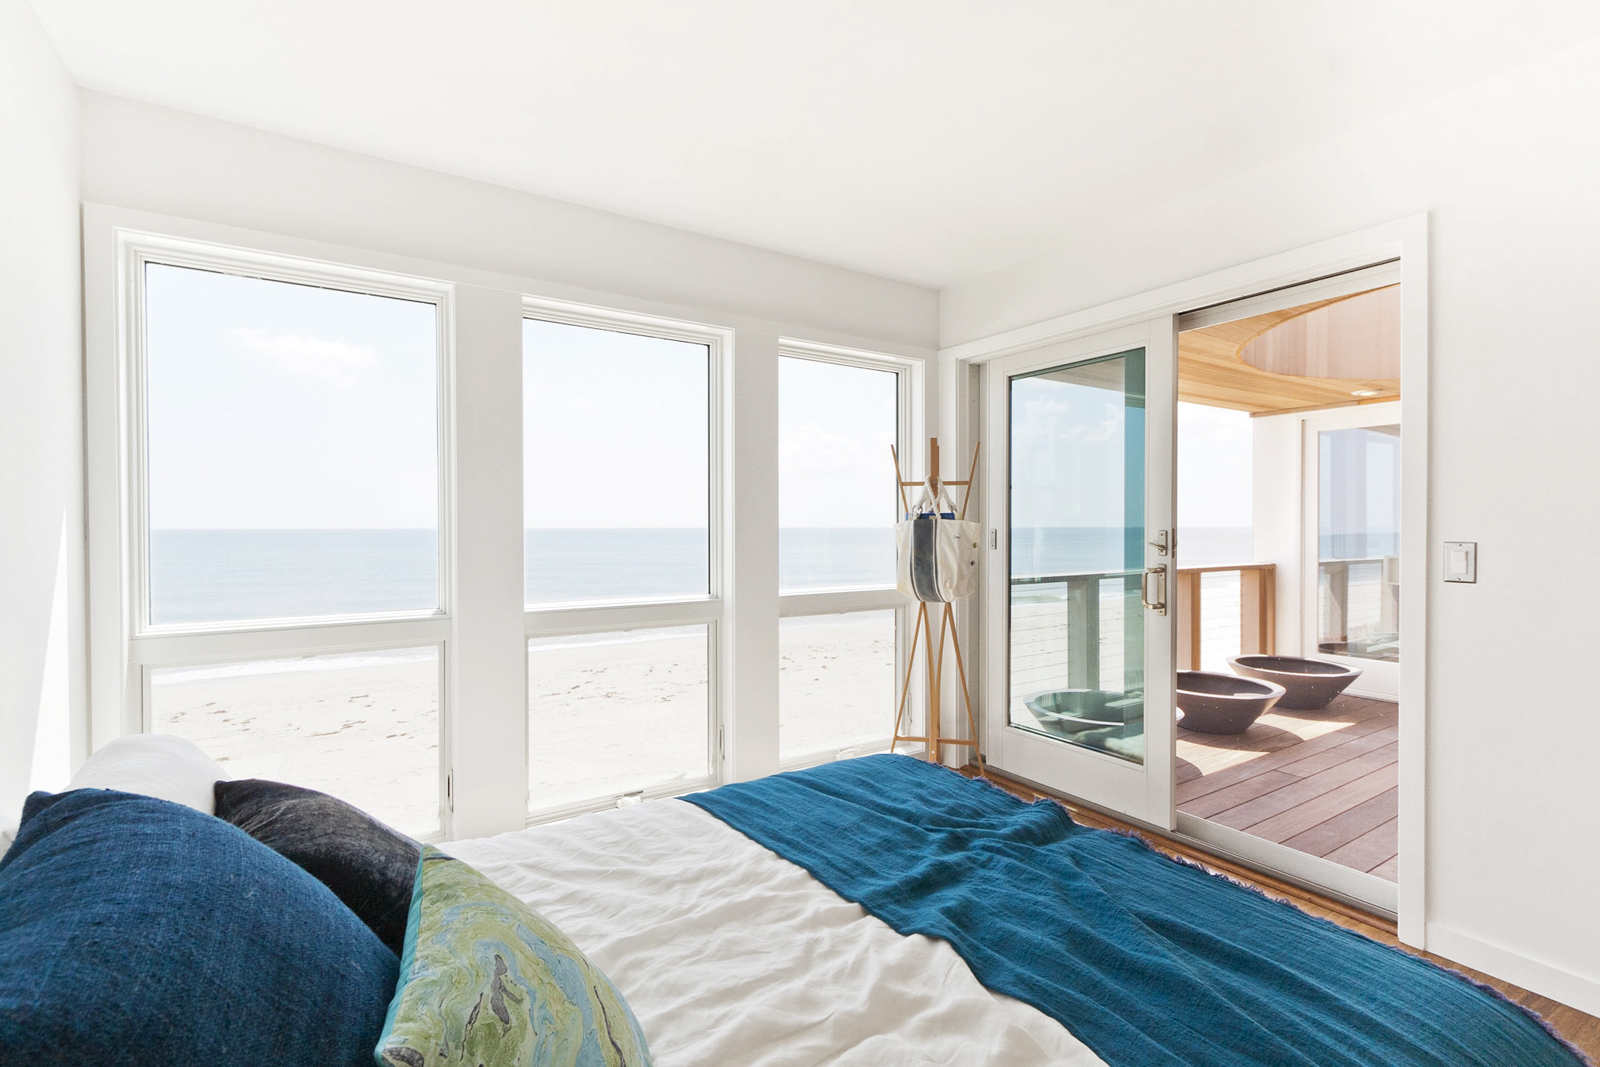 12-res4-resolution-4-architecture-modern-modular-home-prefab-dune-road-beach-house-interior-bedroom.jpg